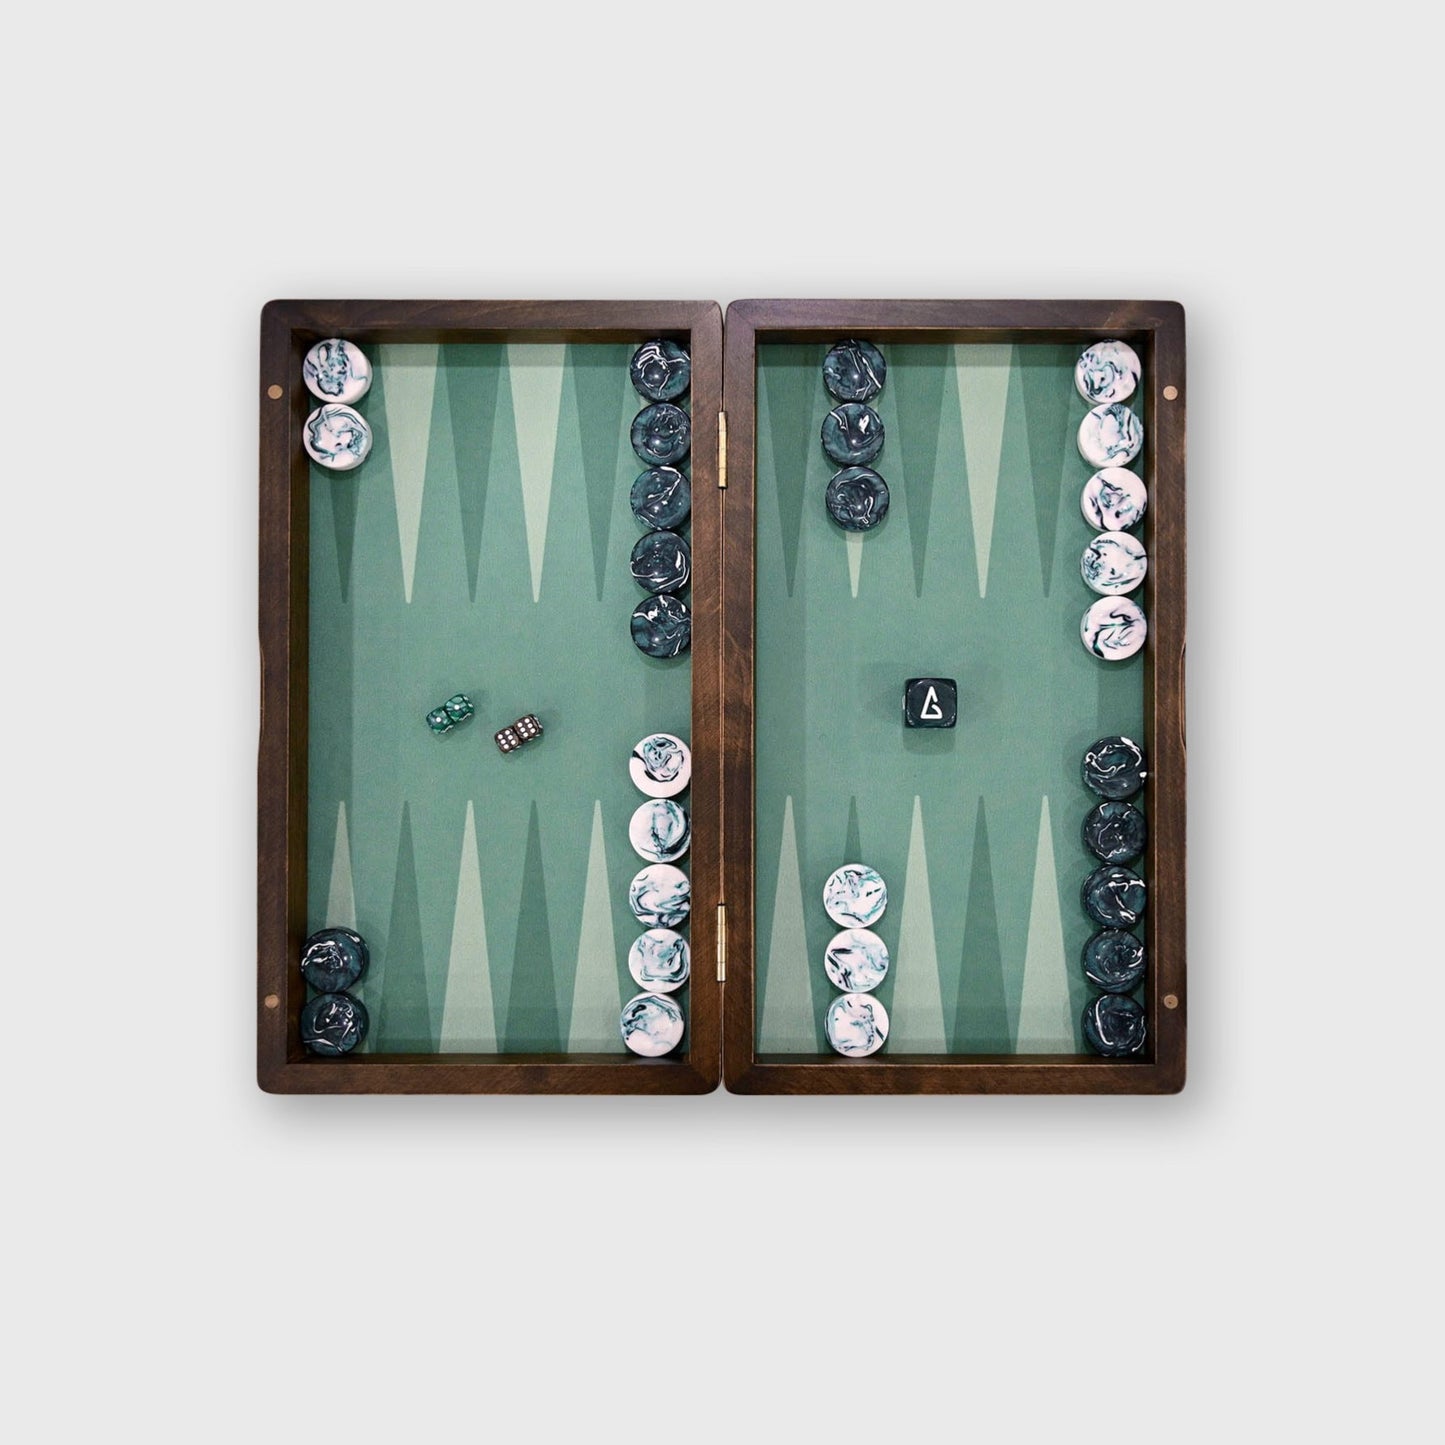 Adventure Board, Style: Earth, “The Mini Earth Board”, Luxury Backgammon Travel Set